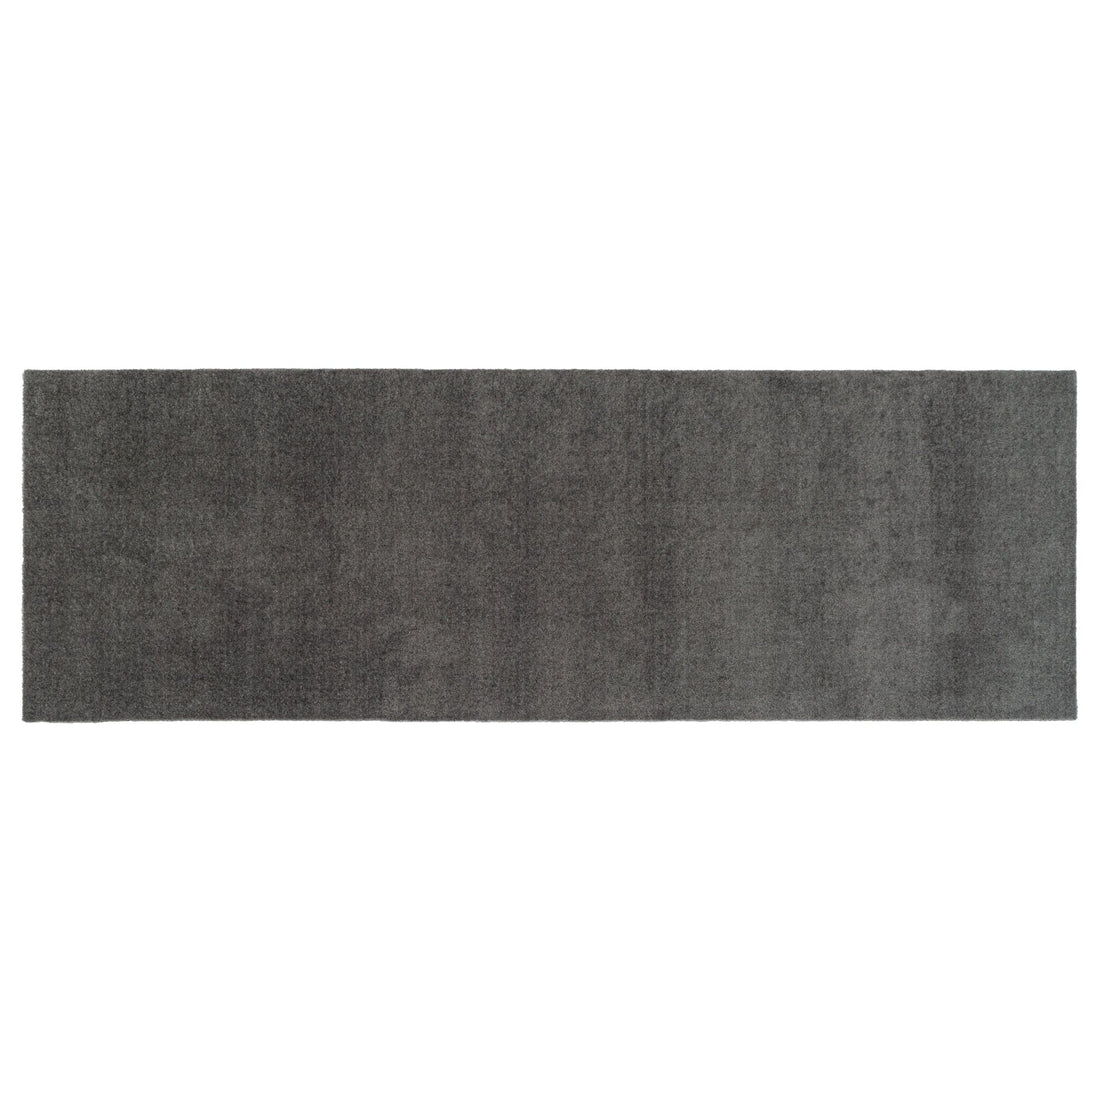 Blanket/had 67 x 200 cm - Uni Color/Steelgrey